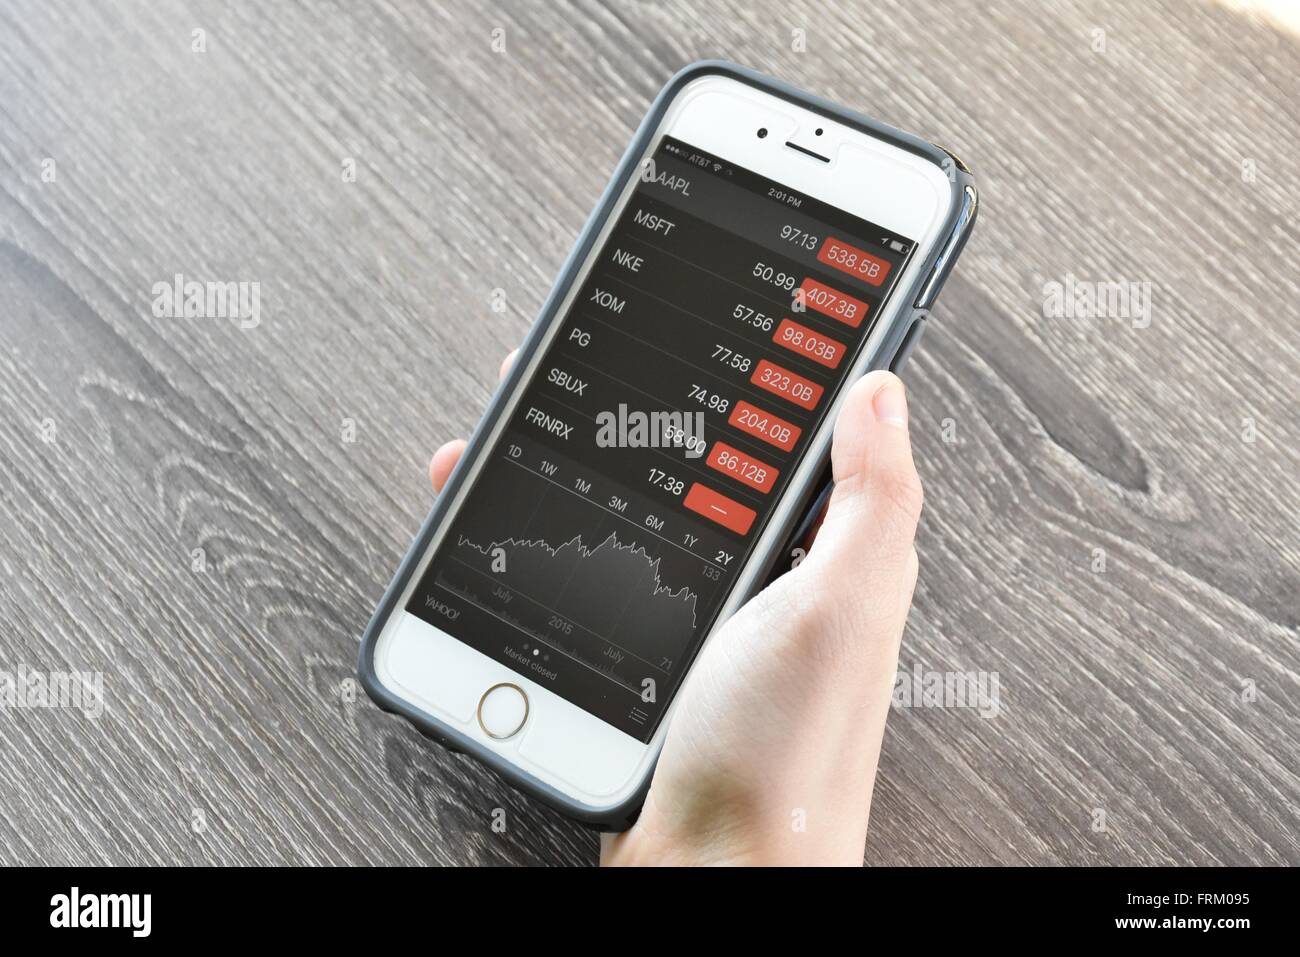 Apple iPhone displaying stock market information Stock Photo